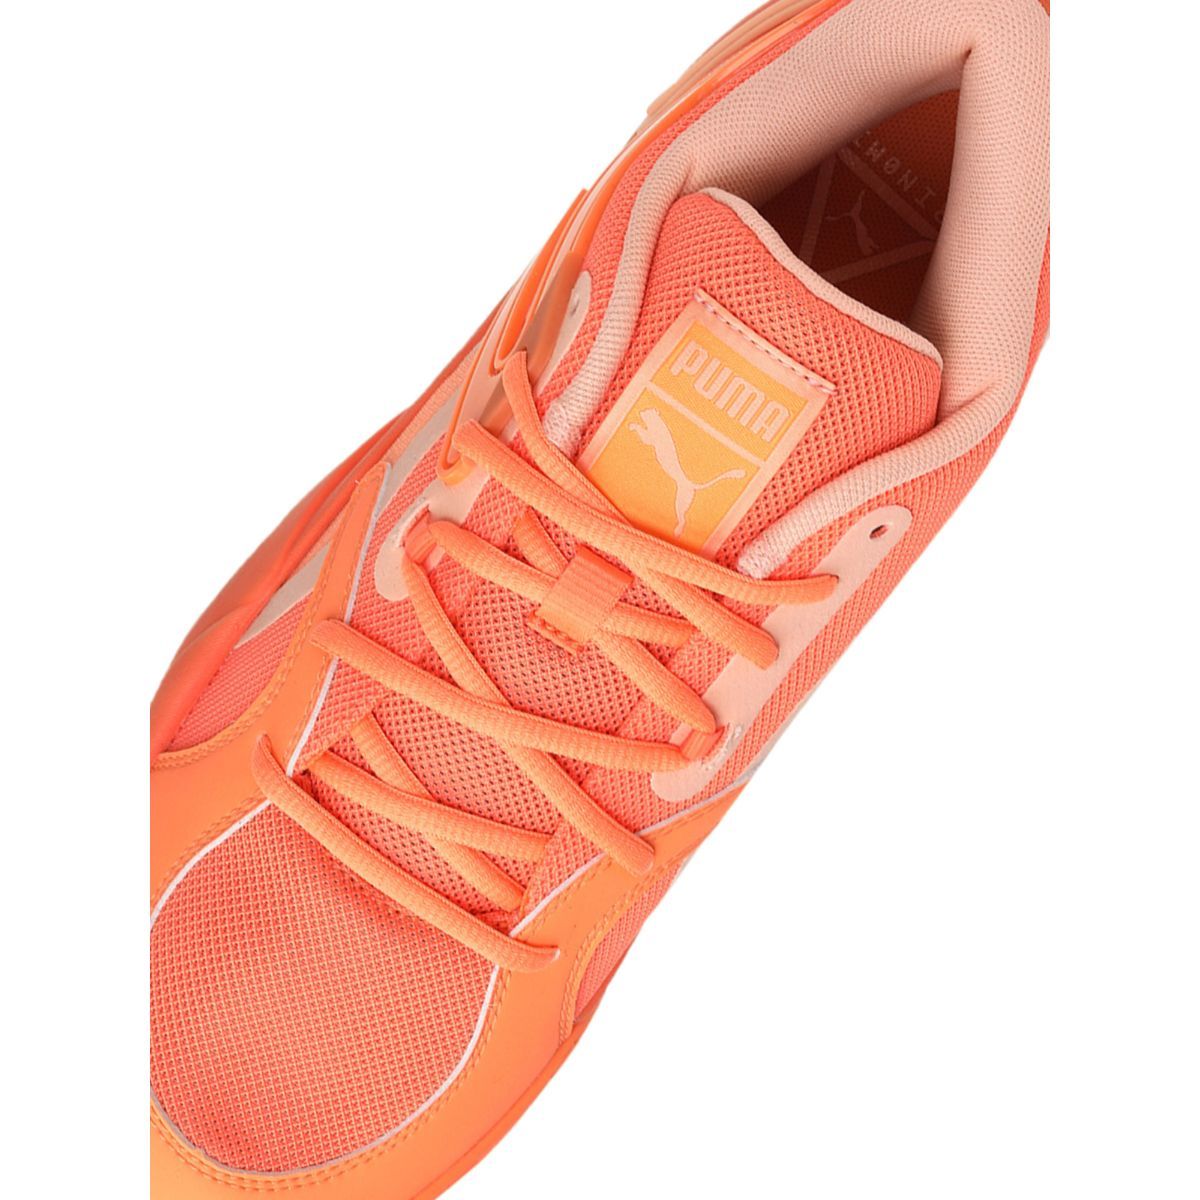 Puma TRC Blaze Court Orange Basketball Shoes (UK 3): Buy Puma TRC Blaze